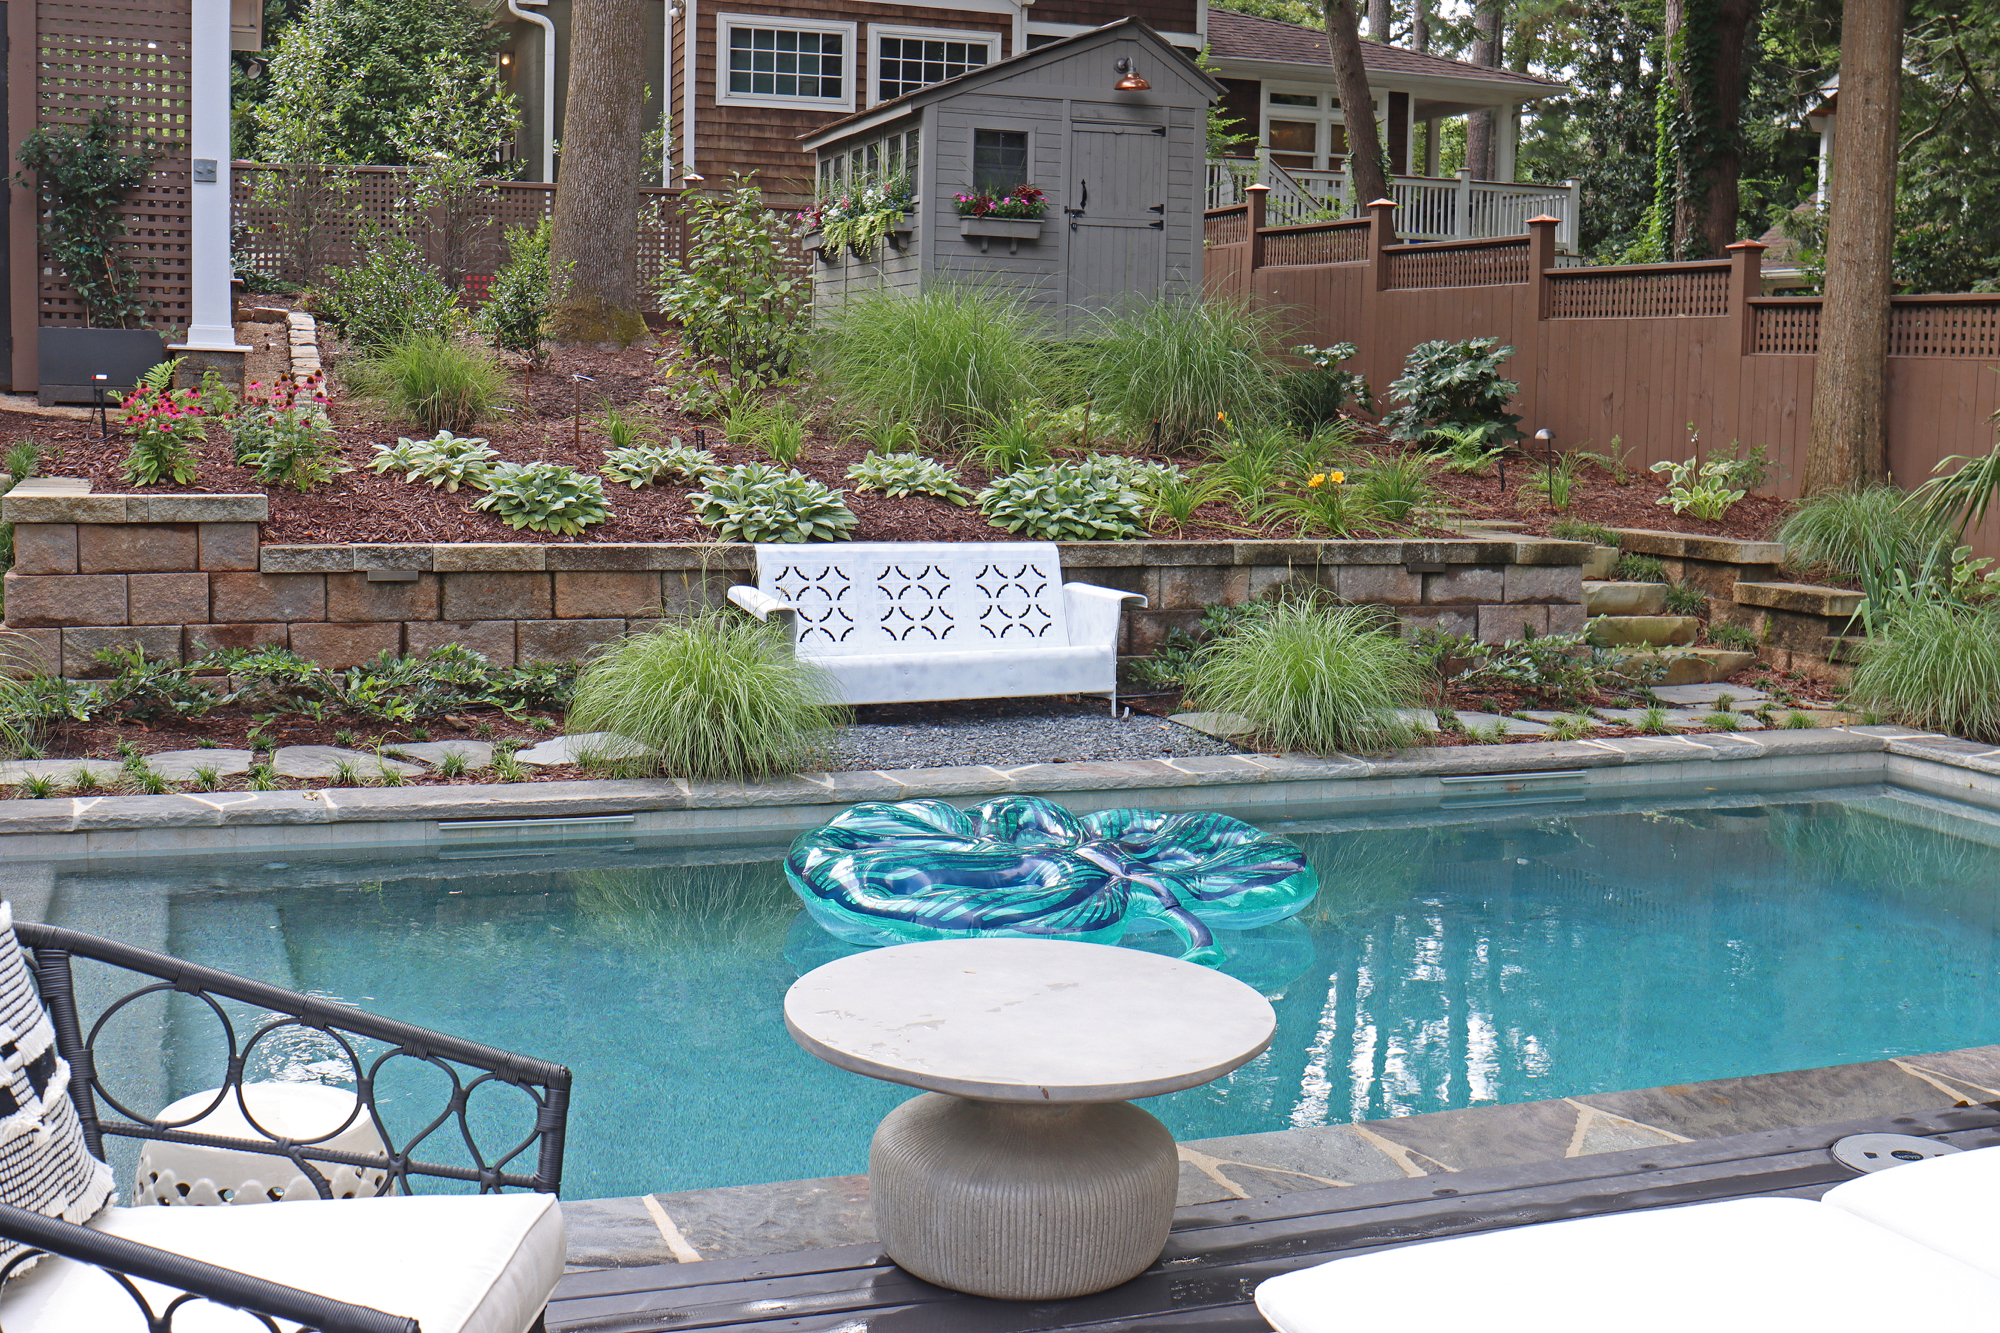 Terraced backyard with pool